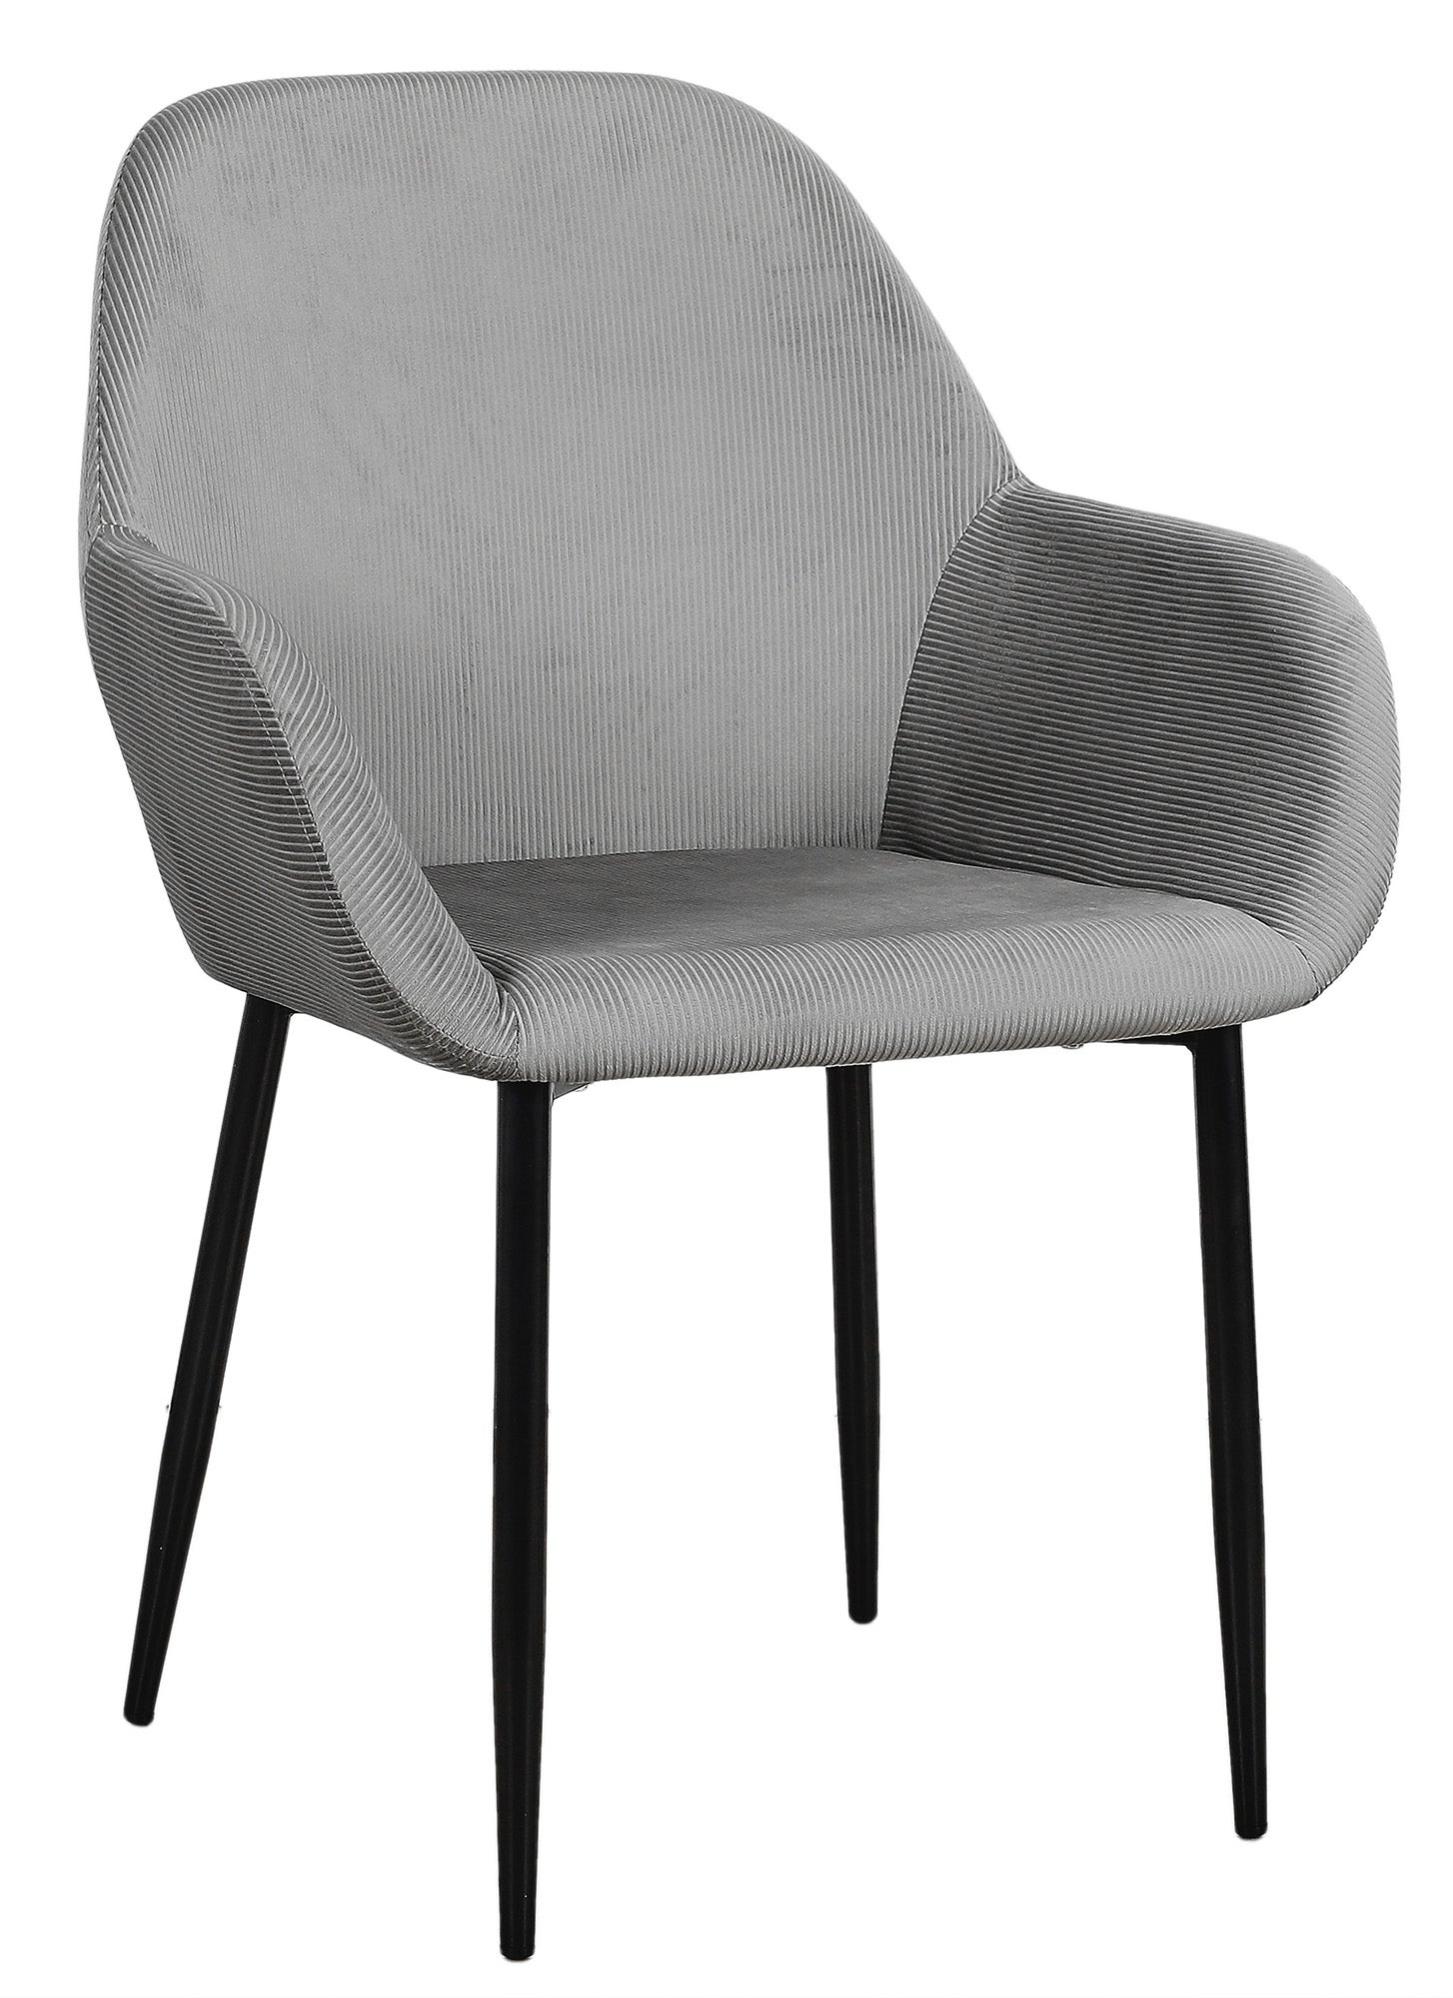 Set de 2 sillas de comedor giulia de madera color gris de 85x55,7x59cm